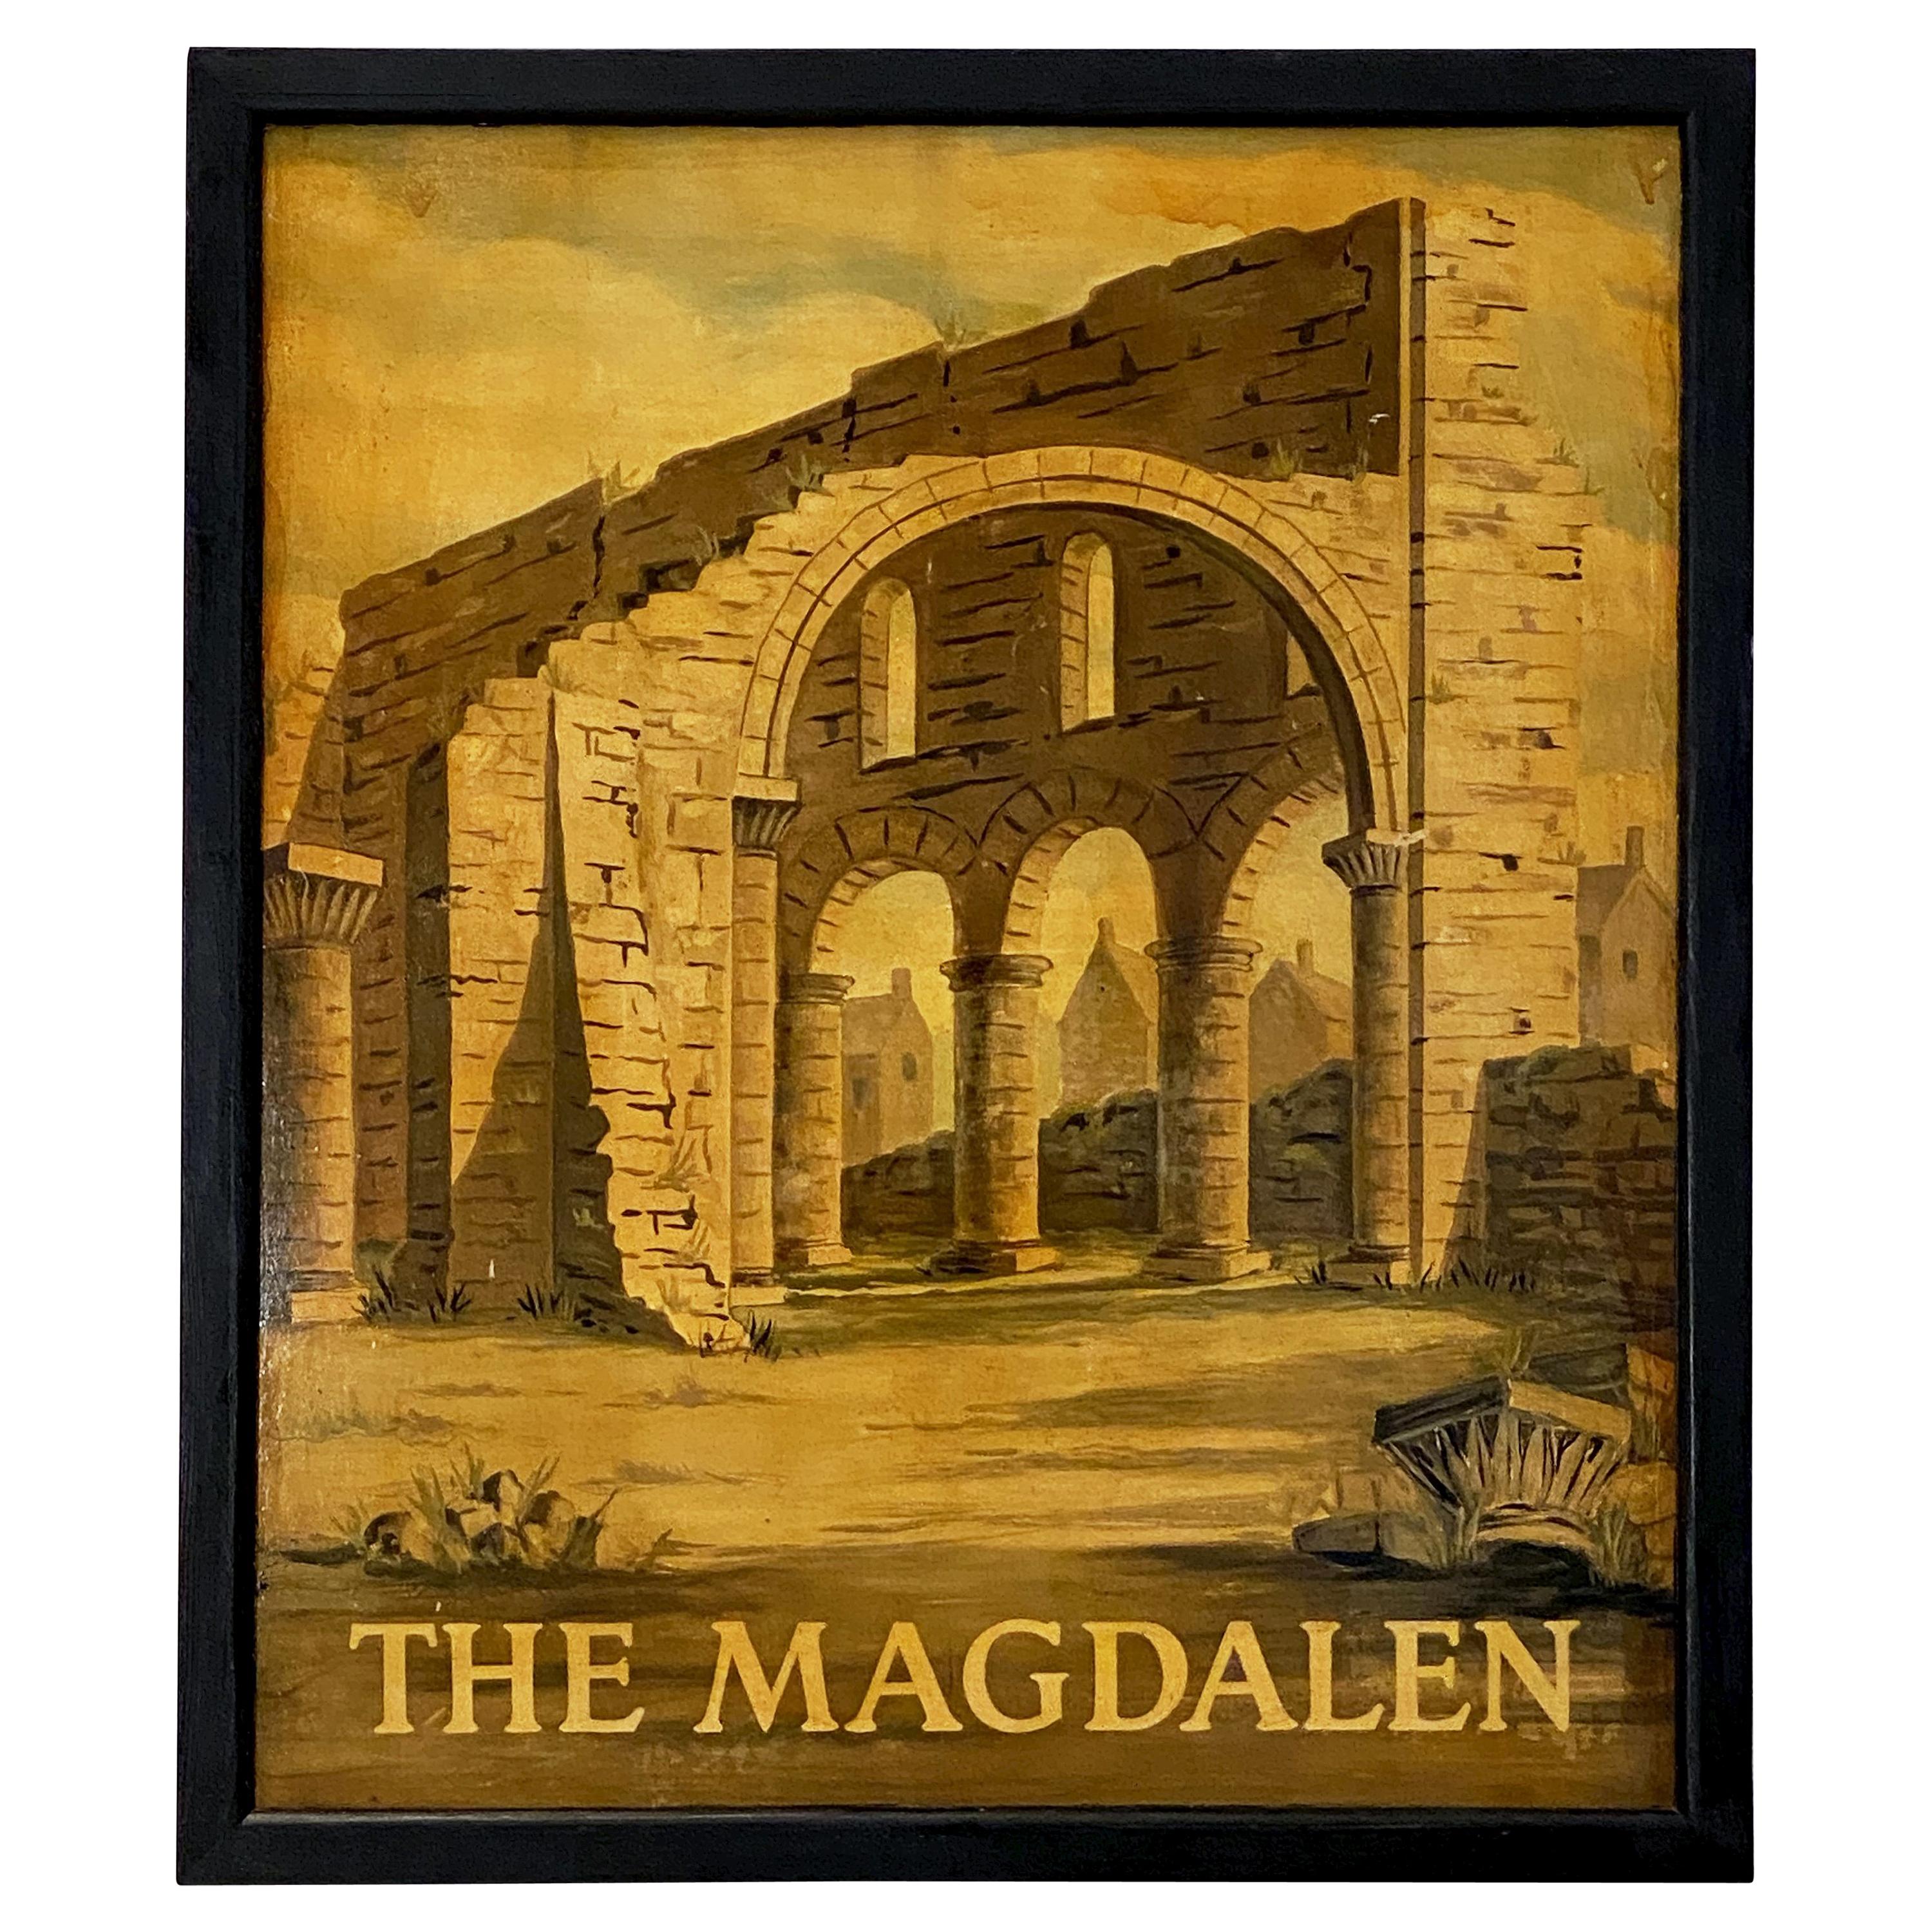 English Pub Sign "The Magdalen"